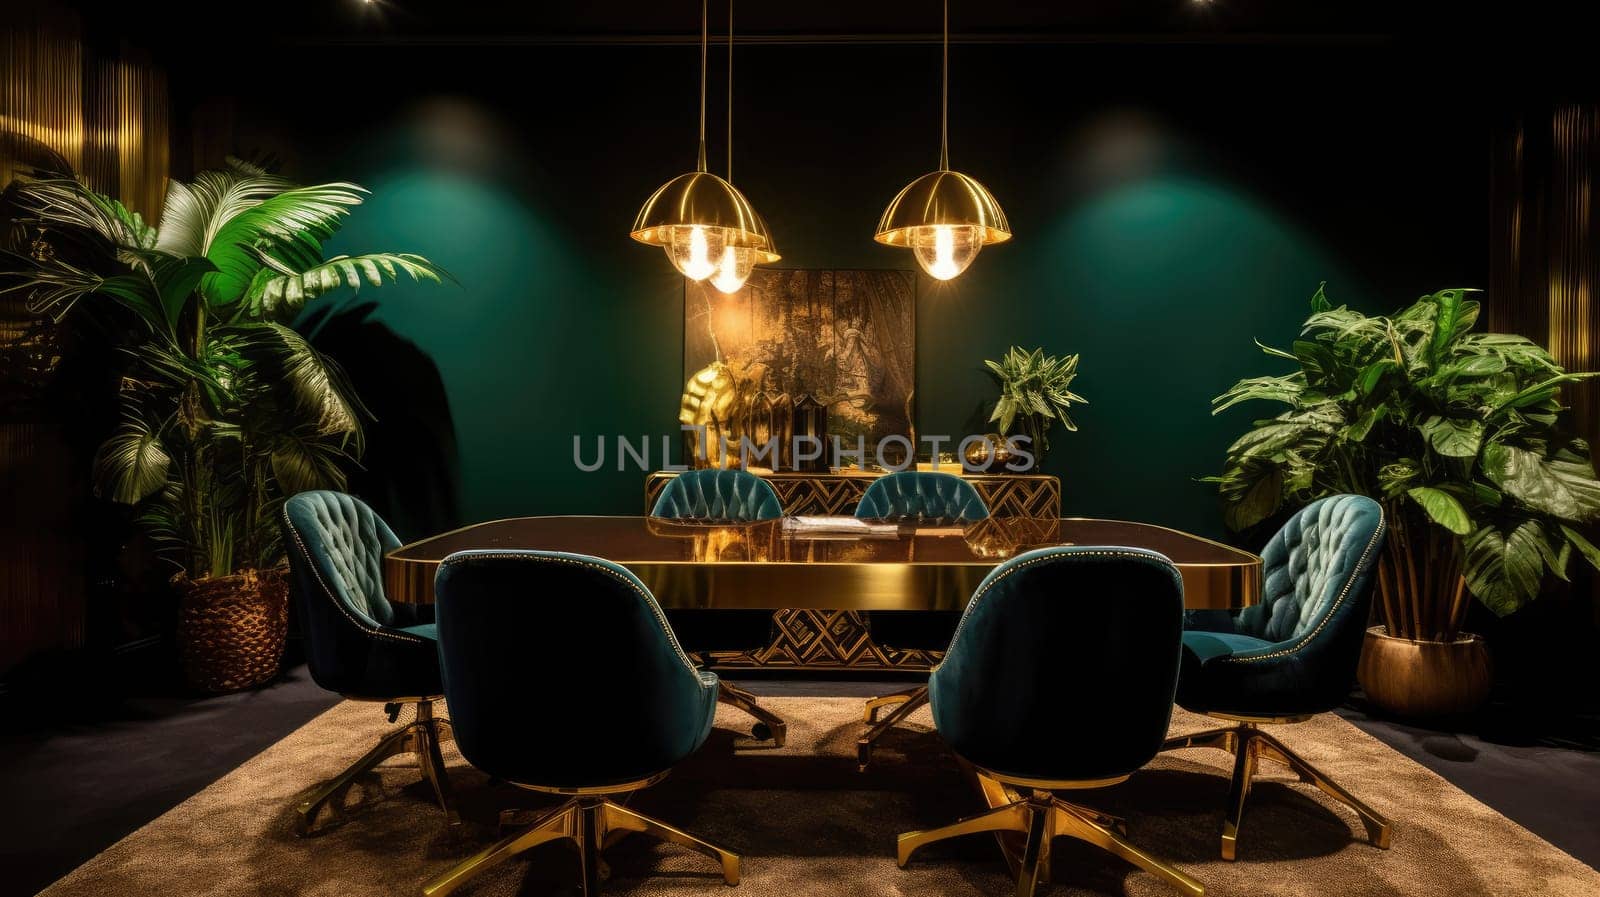 Inspiring office interior design Art Deco style Meeting Room featuring Opulent aesthetics architecture. Generative AI AIG 31.